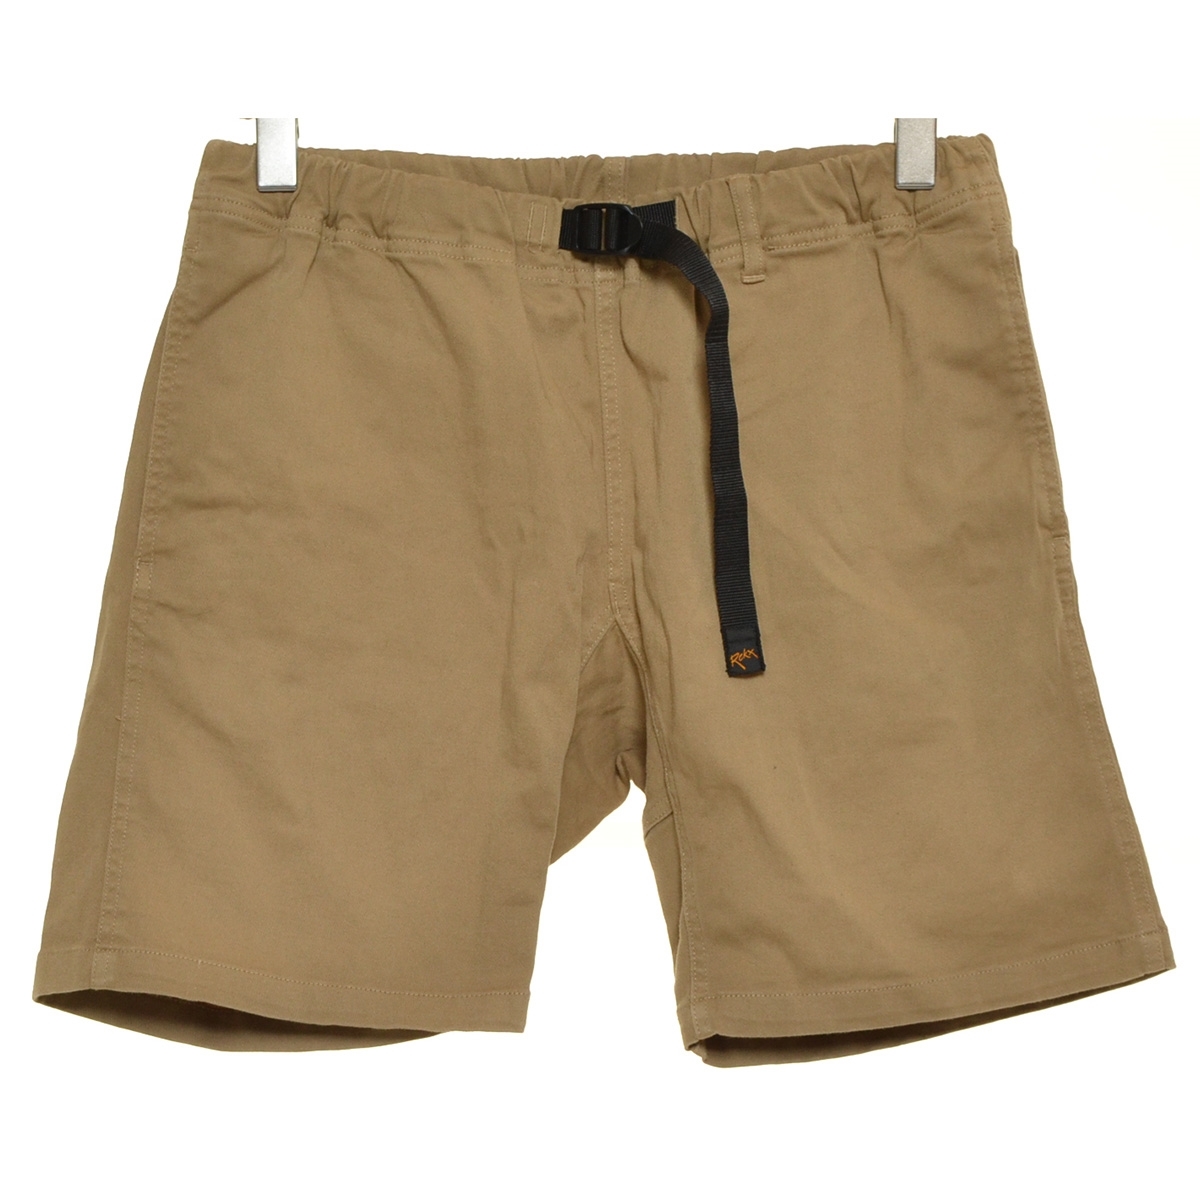 *491317 ROKX lock s* climbing shorts short pants size M men's beige 